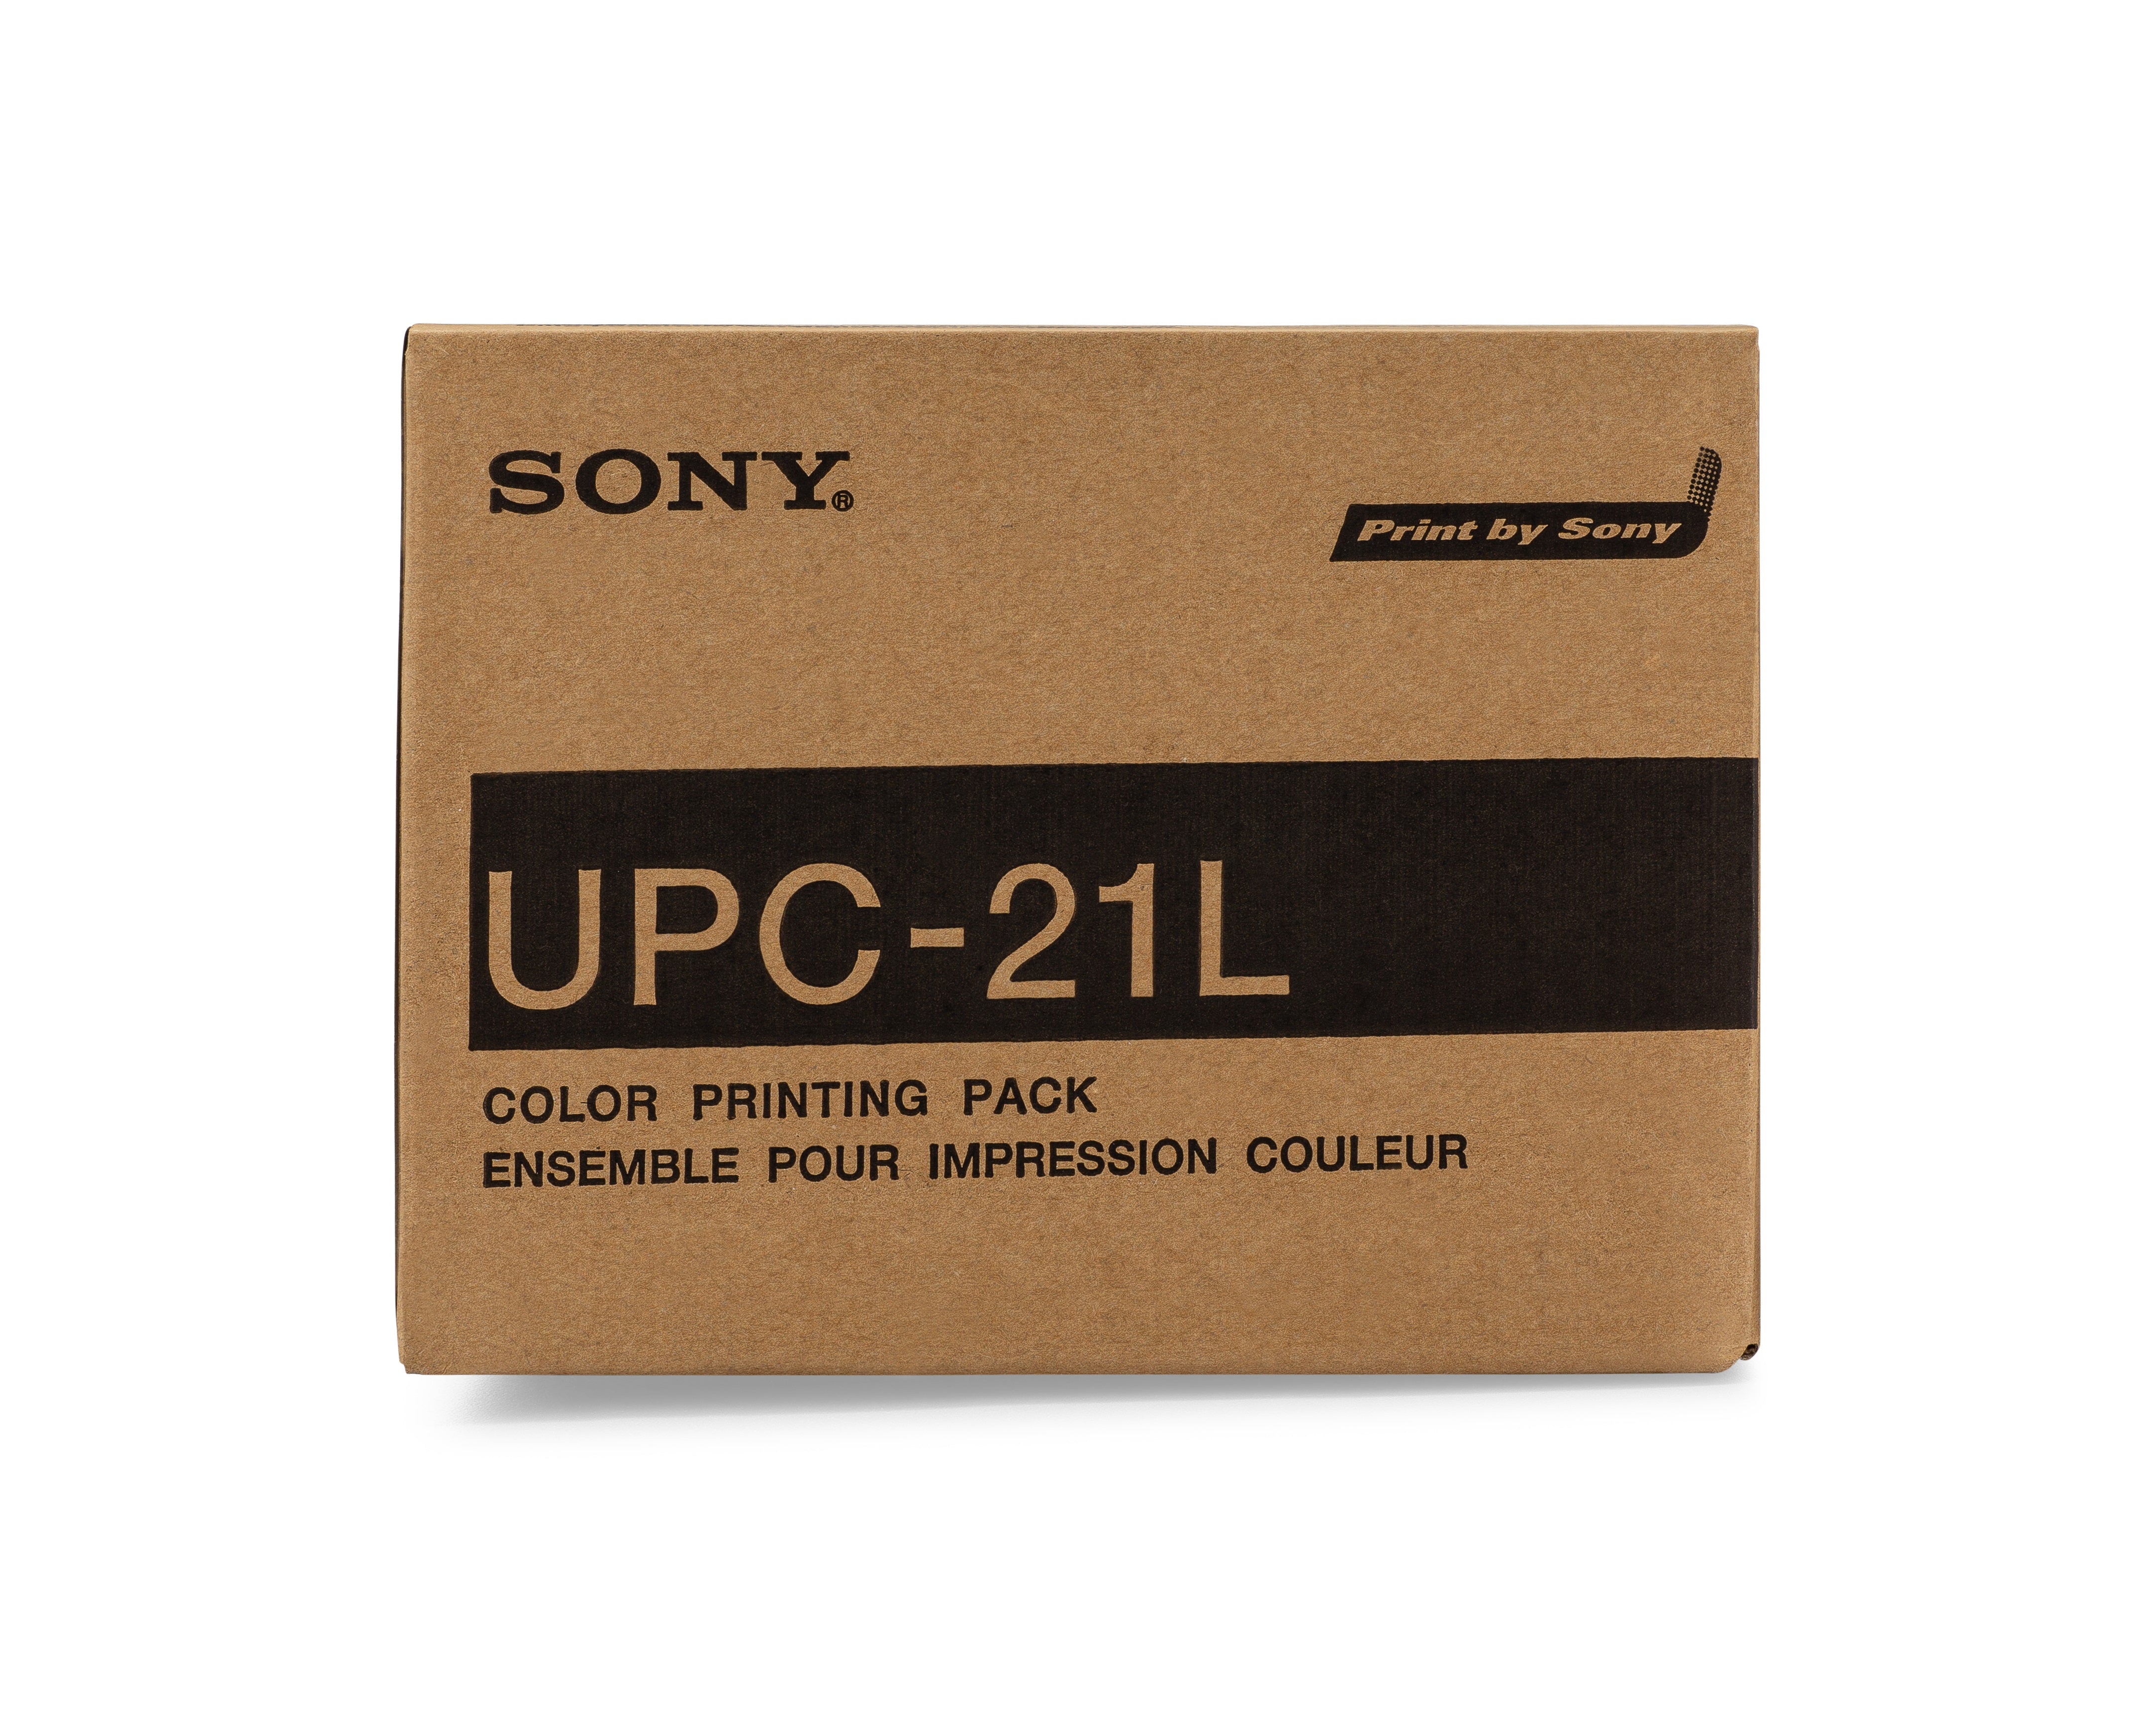 timeren erosion Ged Sony UPC-21L Color Printing Pack